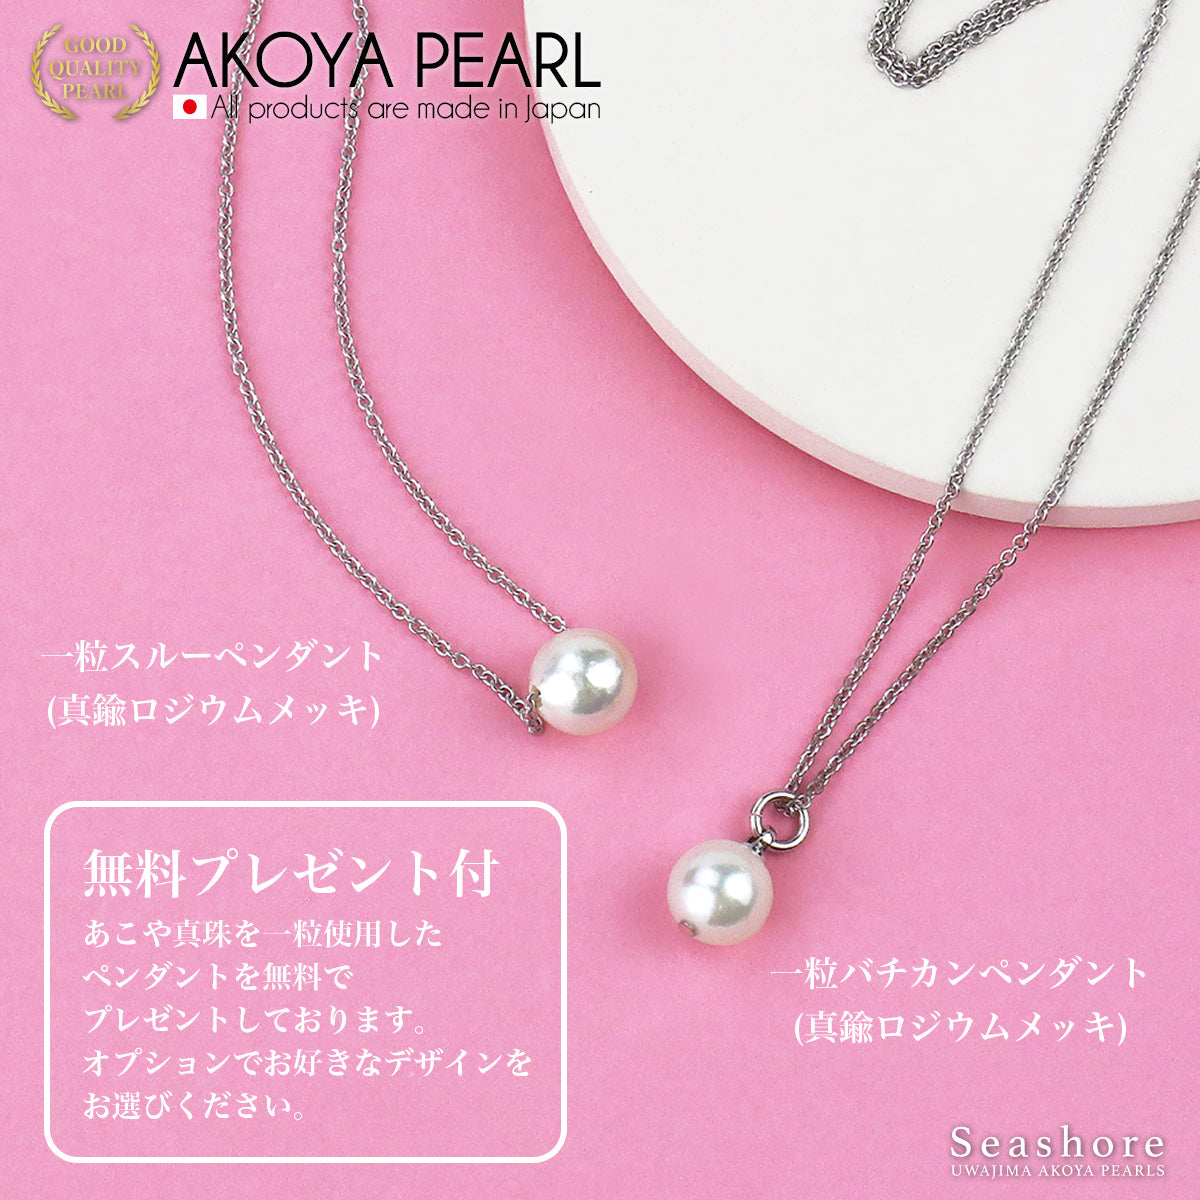 Akoya Pearl Large Bead Earrings / Earrings Dangle Single Swing Type [8.0-8.5mm] SV925/Titanium